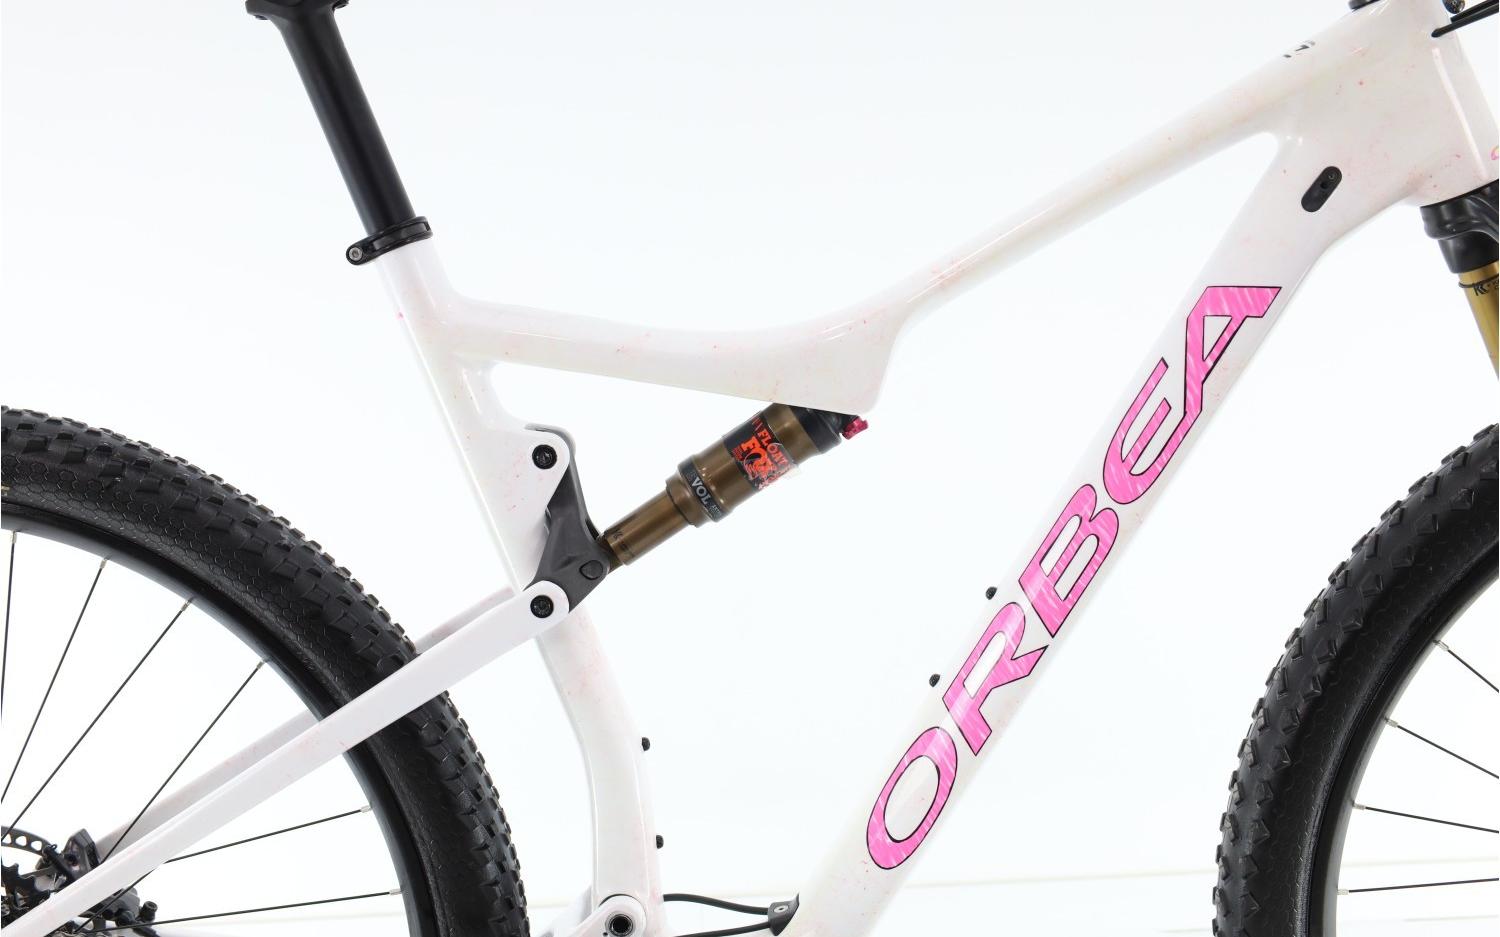 Mountain Bike Orbea Zyclora ·  Oiz M10 carbonio X01, Usata, 2018, Barcelona